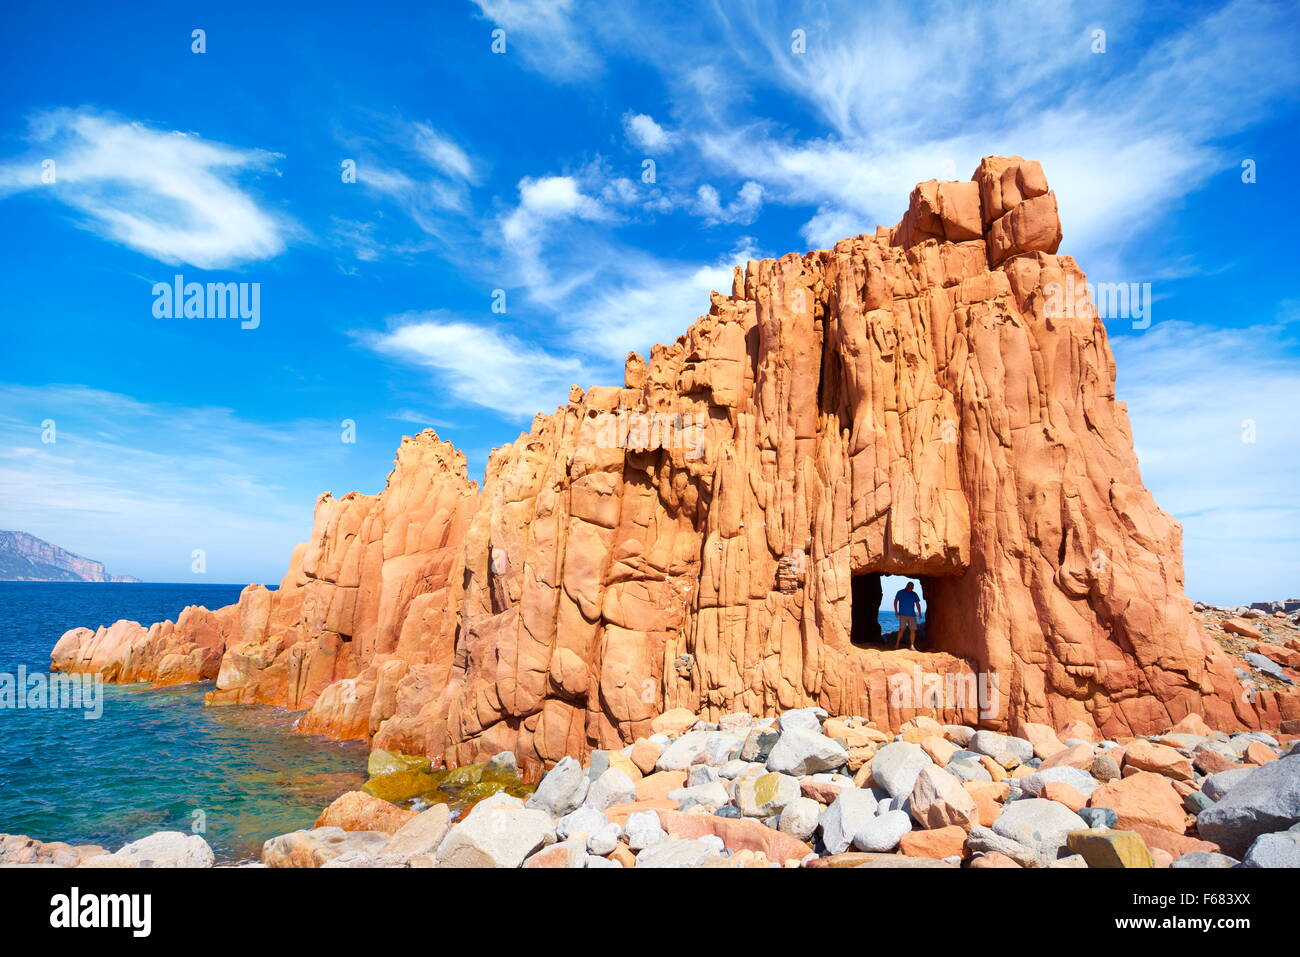 Insel Sardinien - Arbatax, Red Rocks, Porphyr rockt Bildung, Golfo di Orosei, Italien Stockfoto